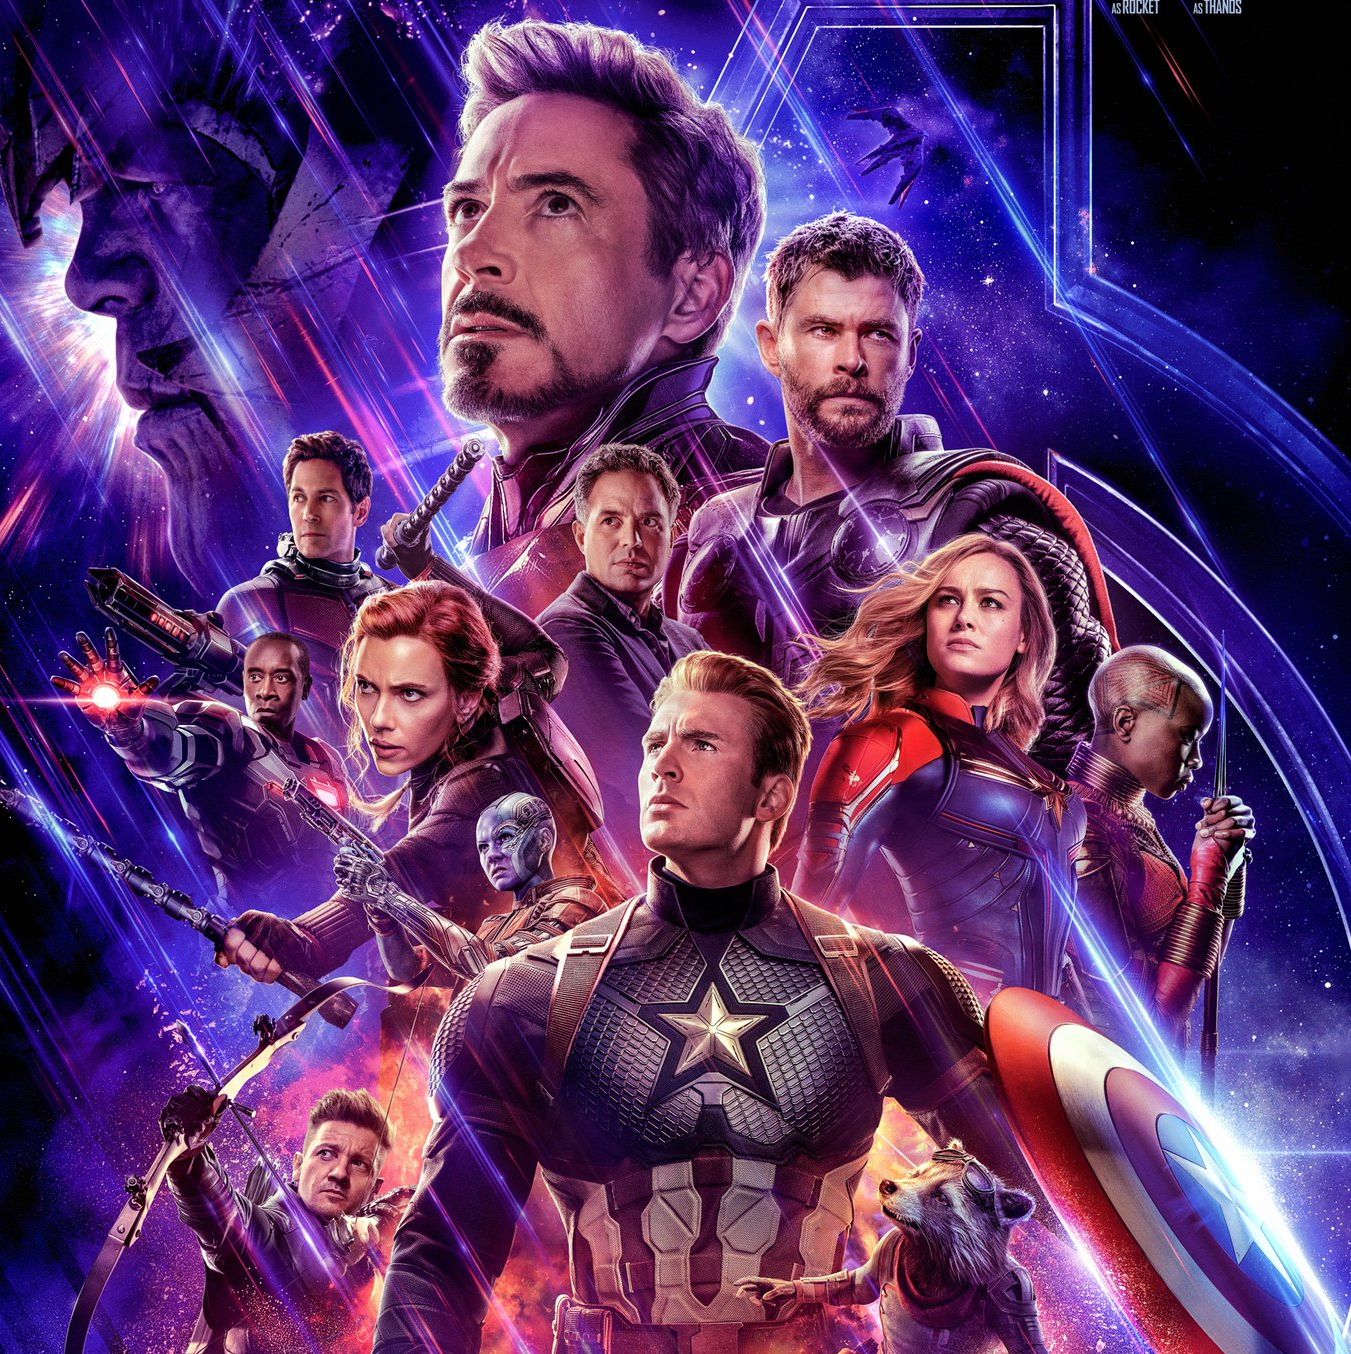 Avengers: Endgame Poster Controversy - Marvel Changed the Avengers: Endgame  Poster After Outrage